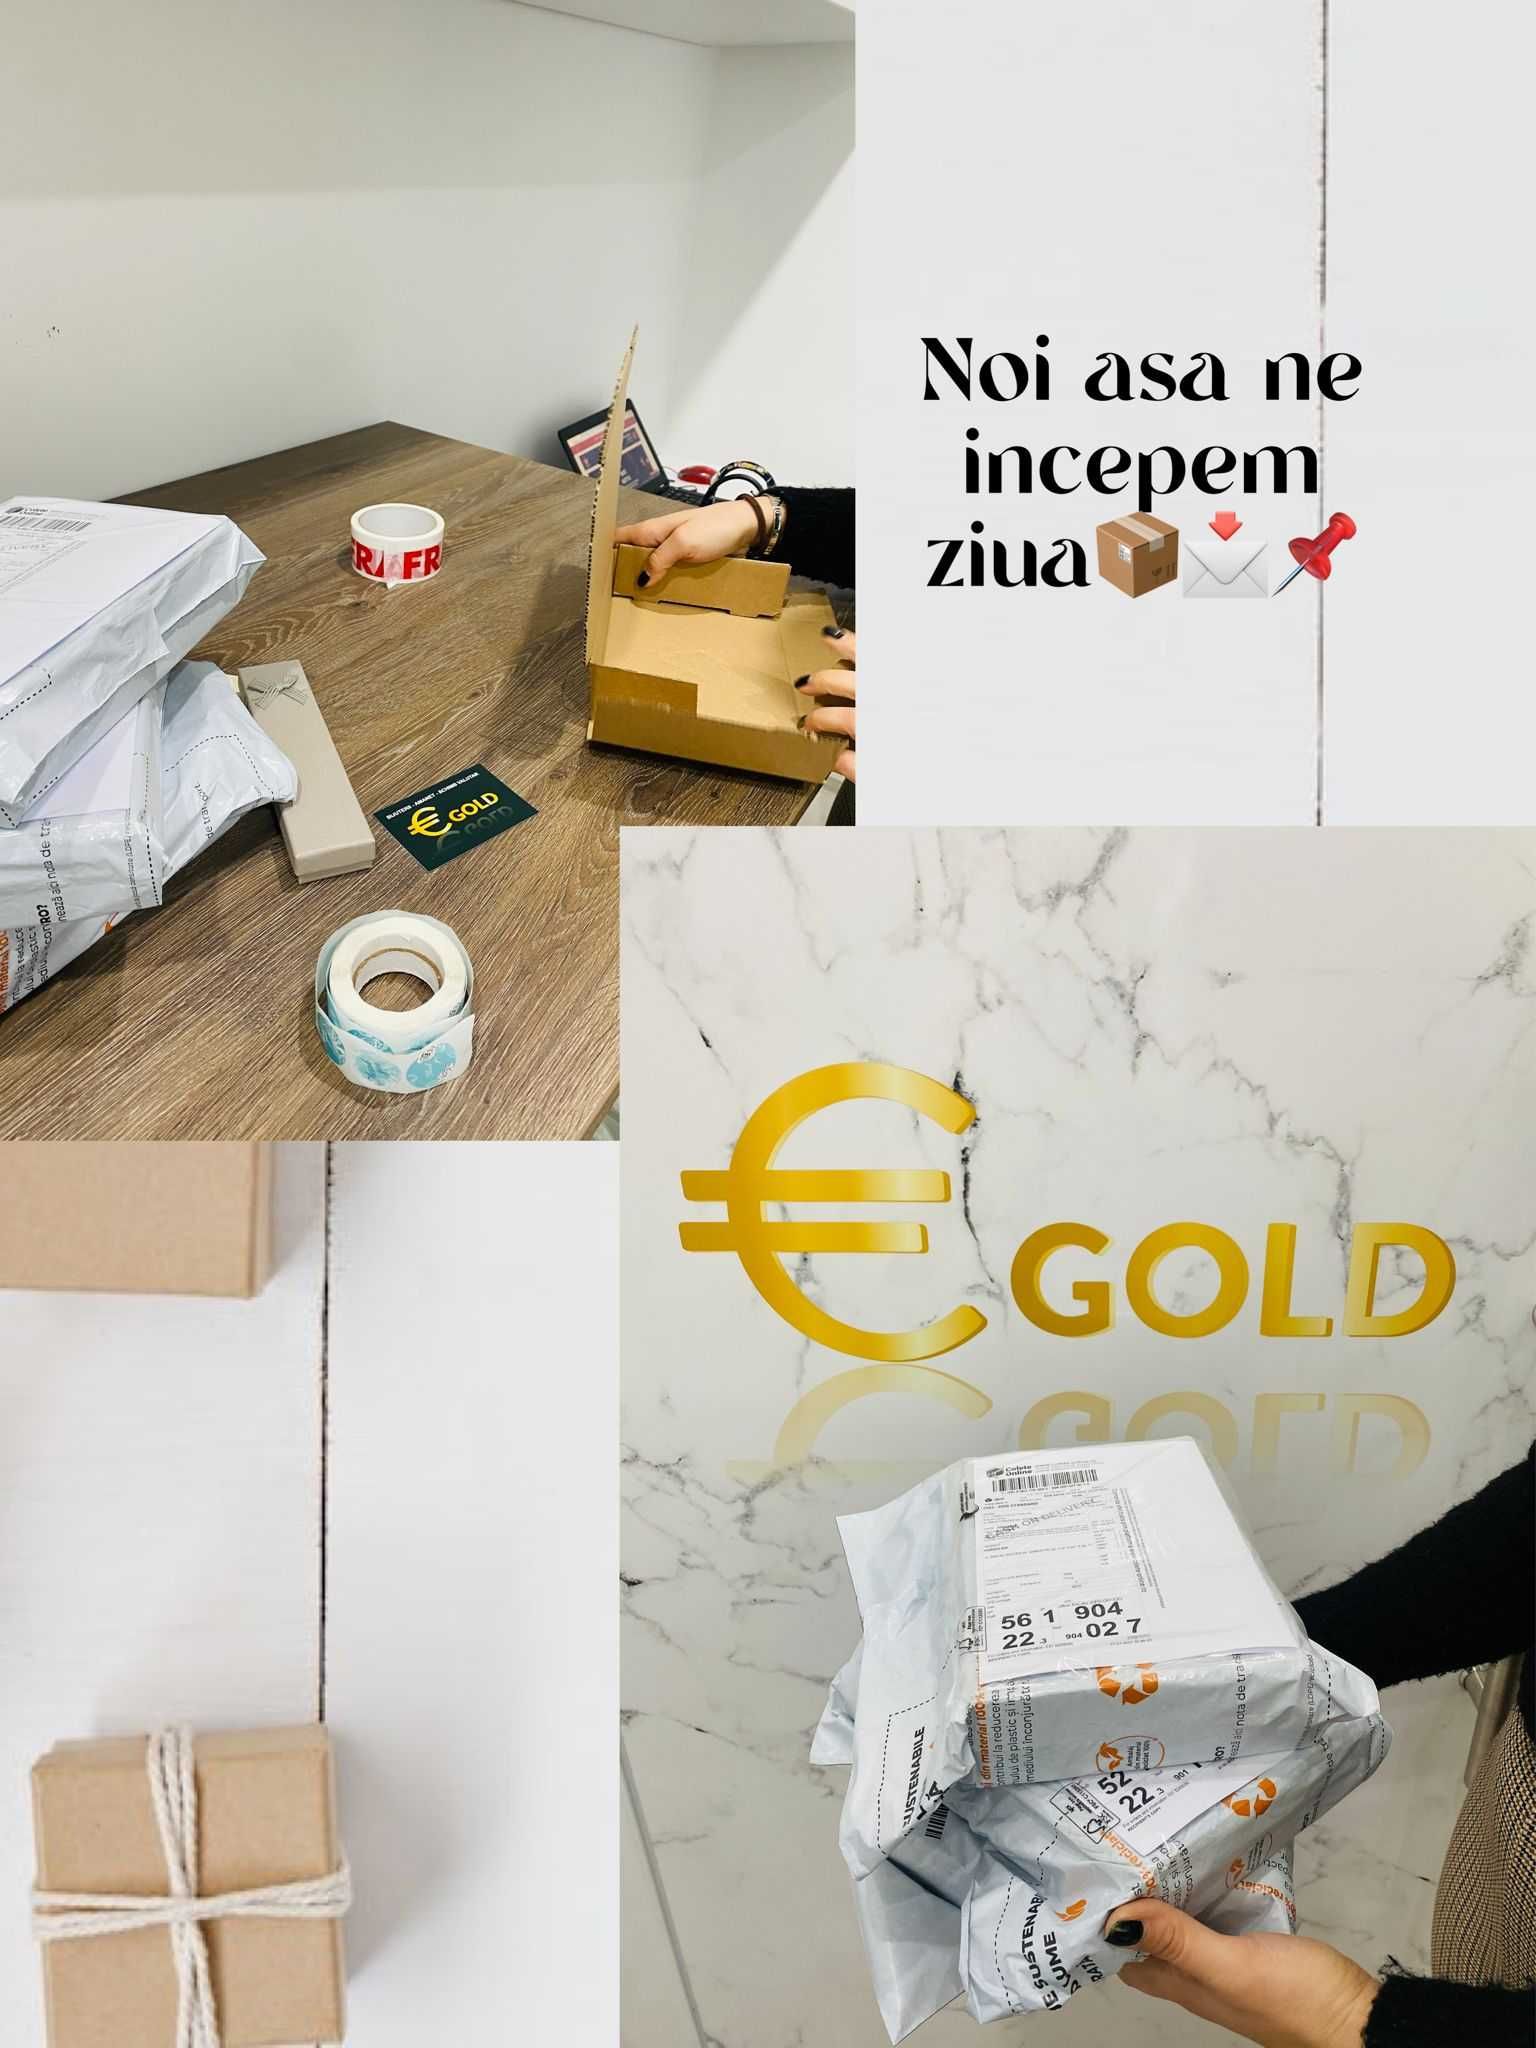 (3086) Cercei Aur 14k, 1,75 grame FB Bijoux Euro Gold